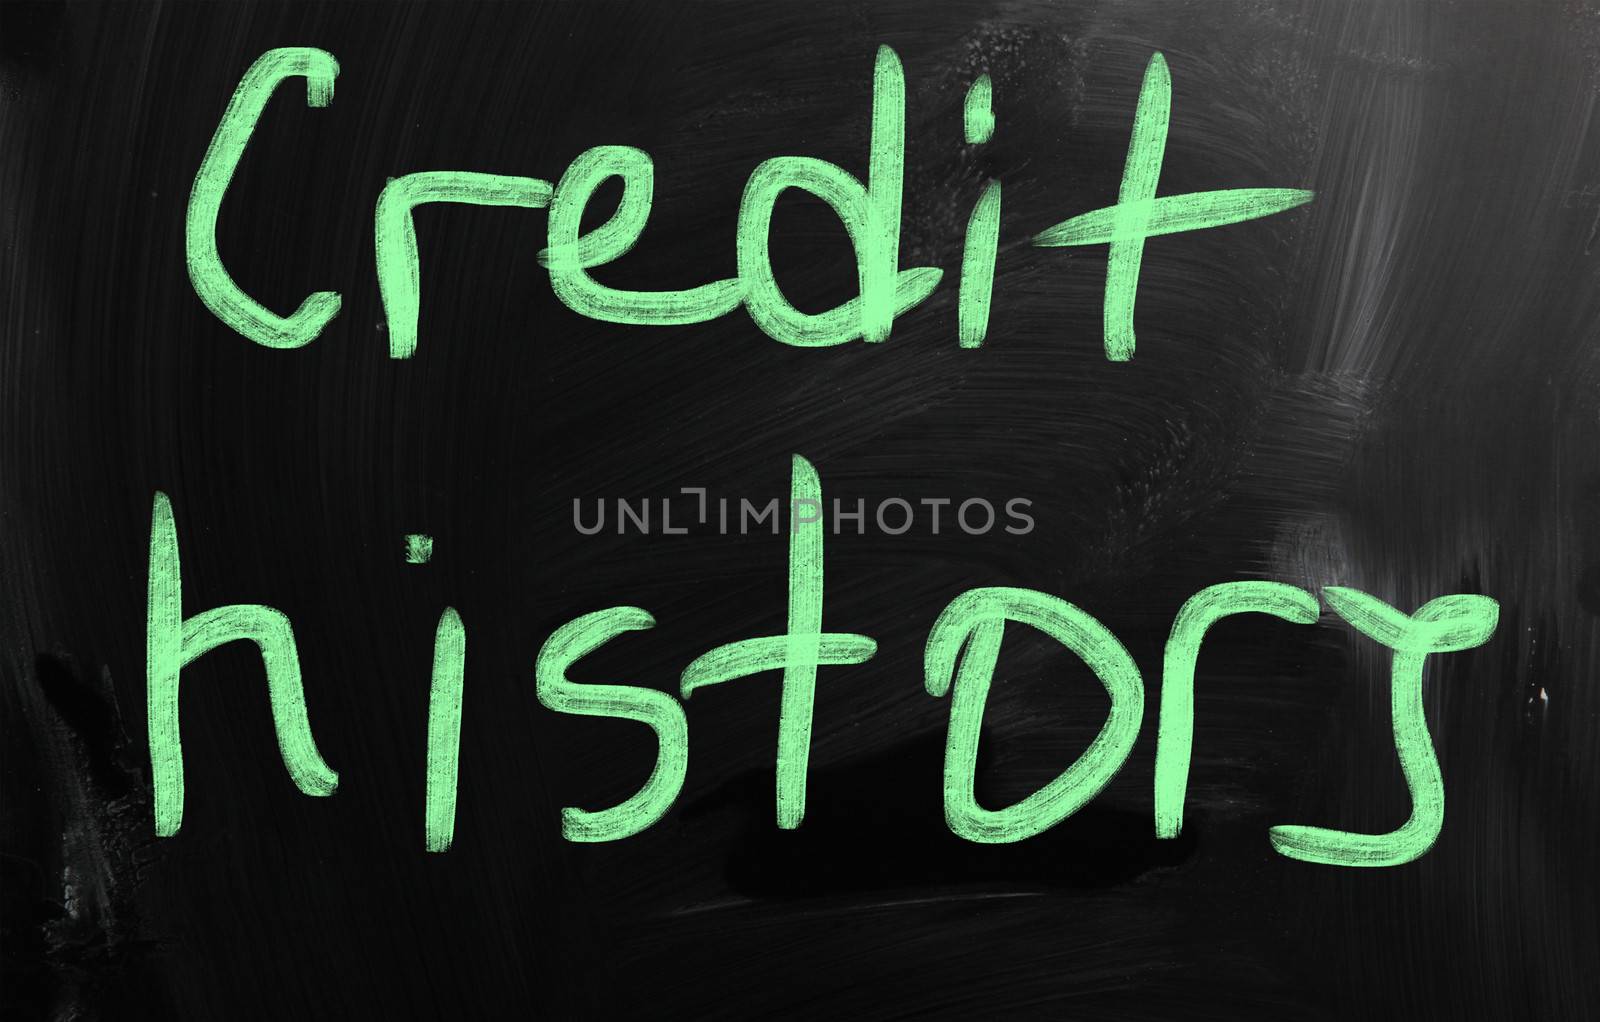 Credit history